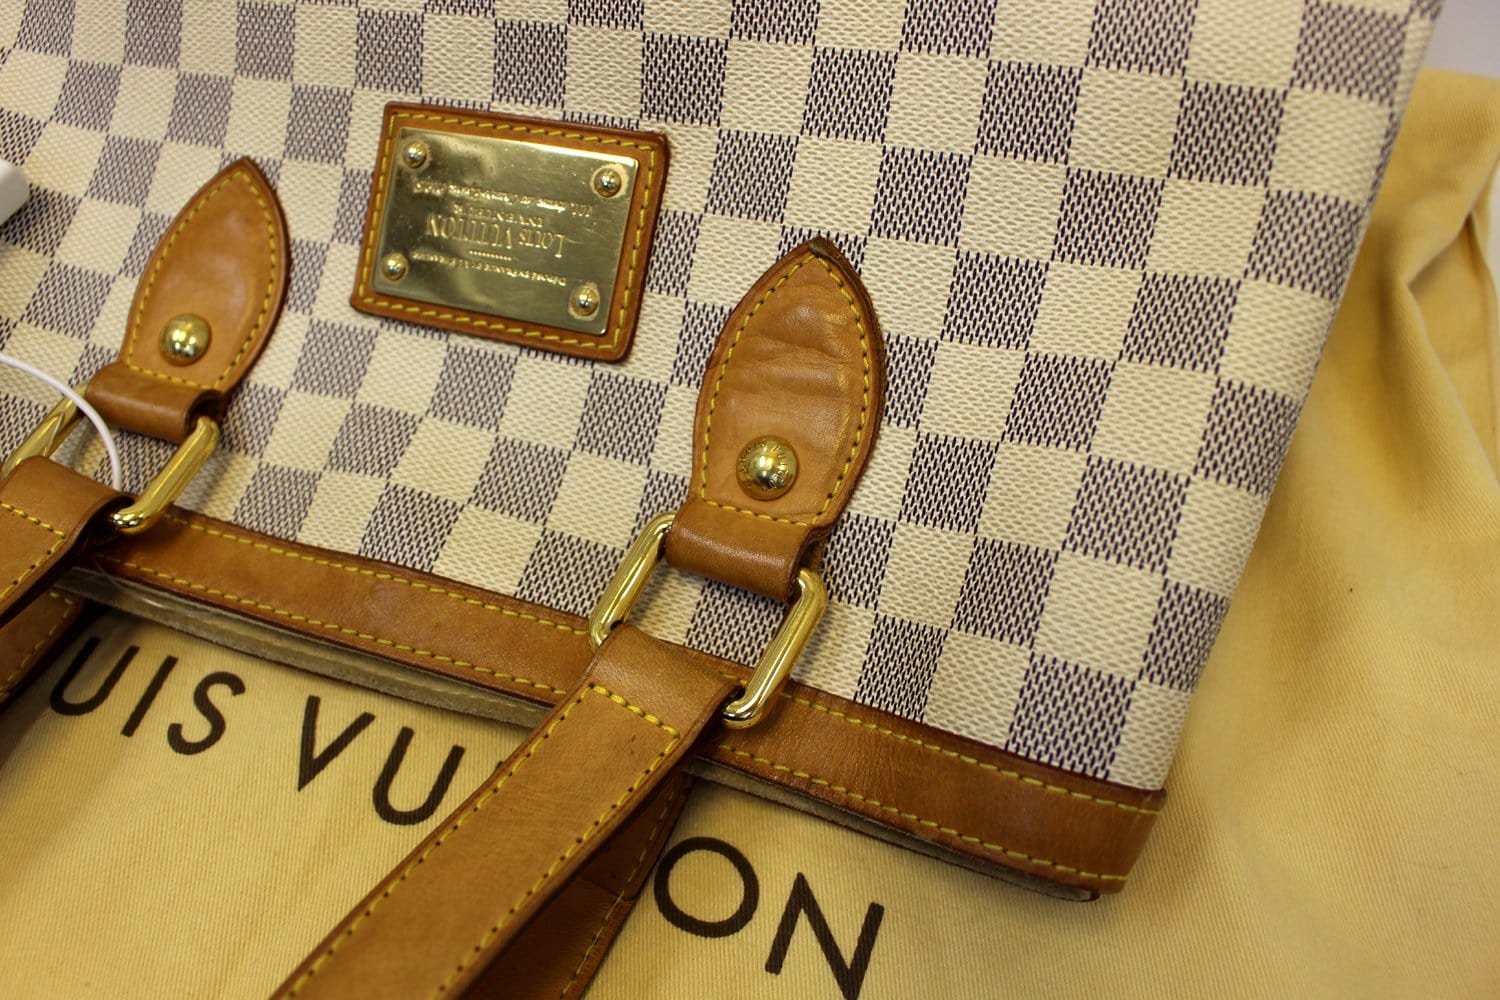 Louis Vuitton Damier Ebene Canvas Croisette Bag at 1stDibs